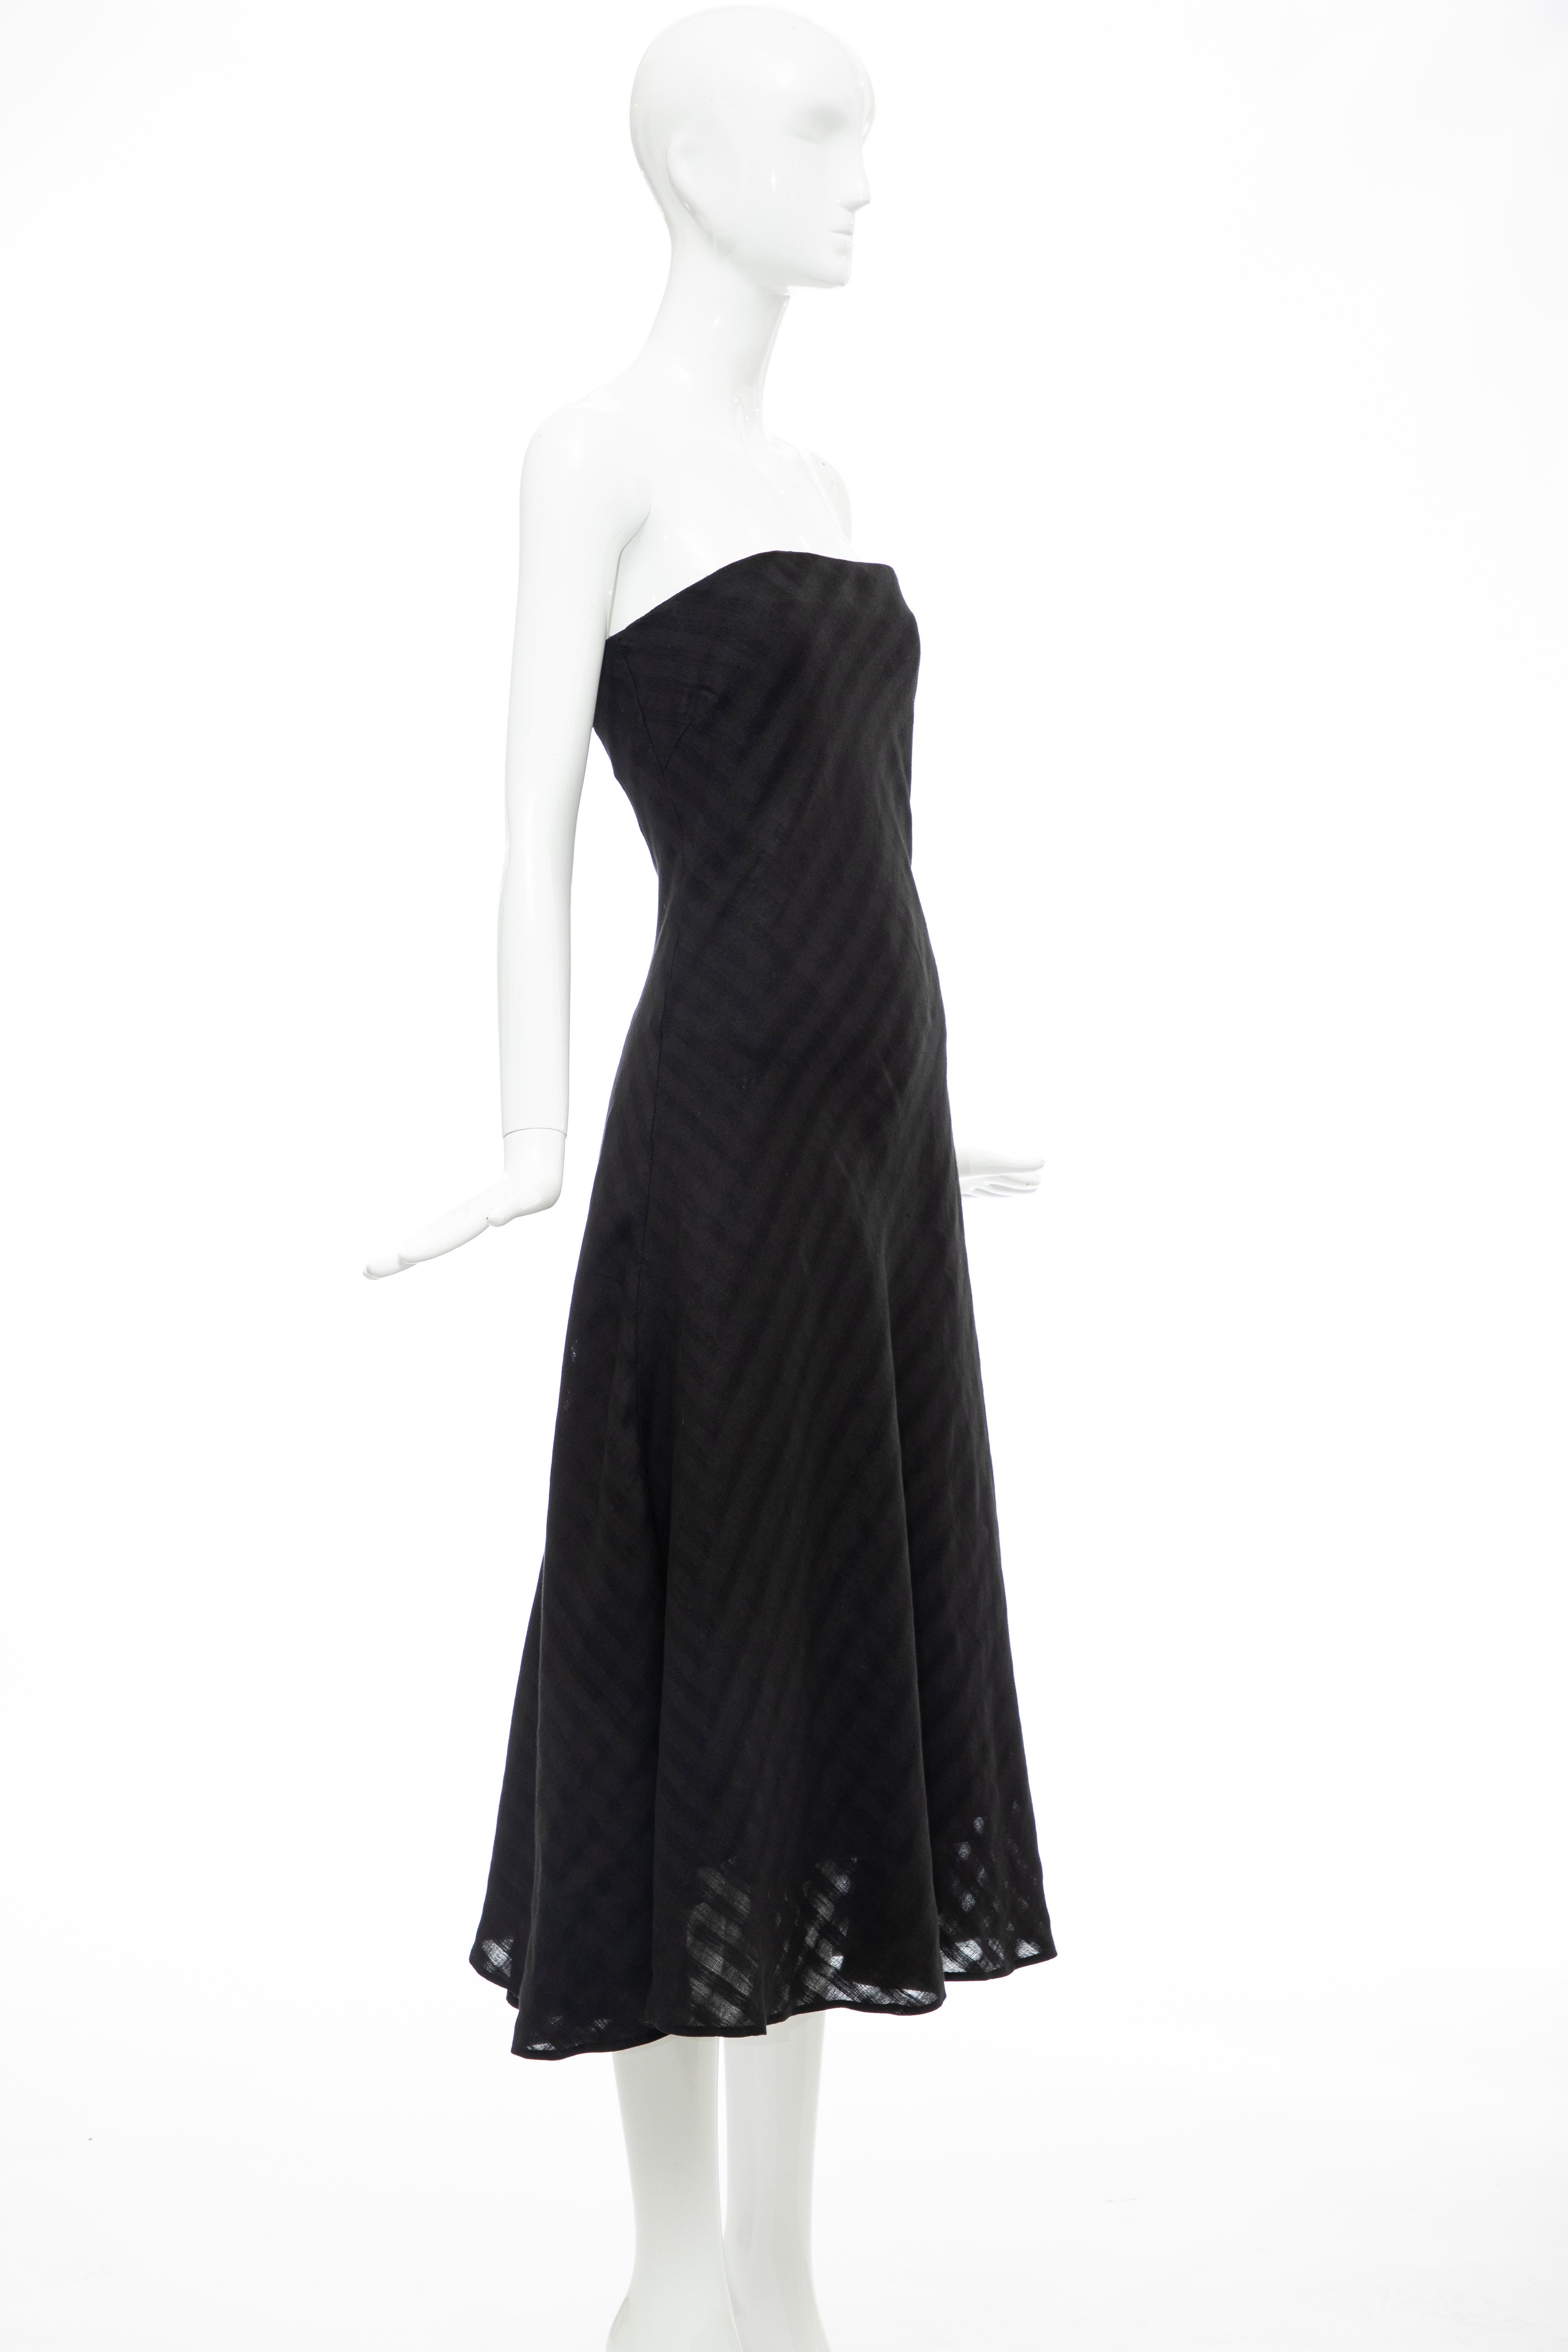 Women's Olivier Theyskens Runway Black Linen Dress, Spring 2000 For Sale